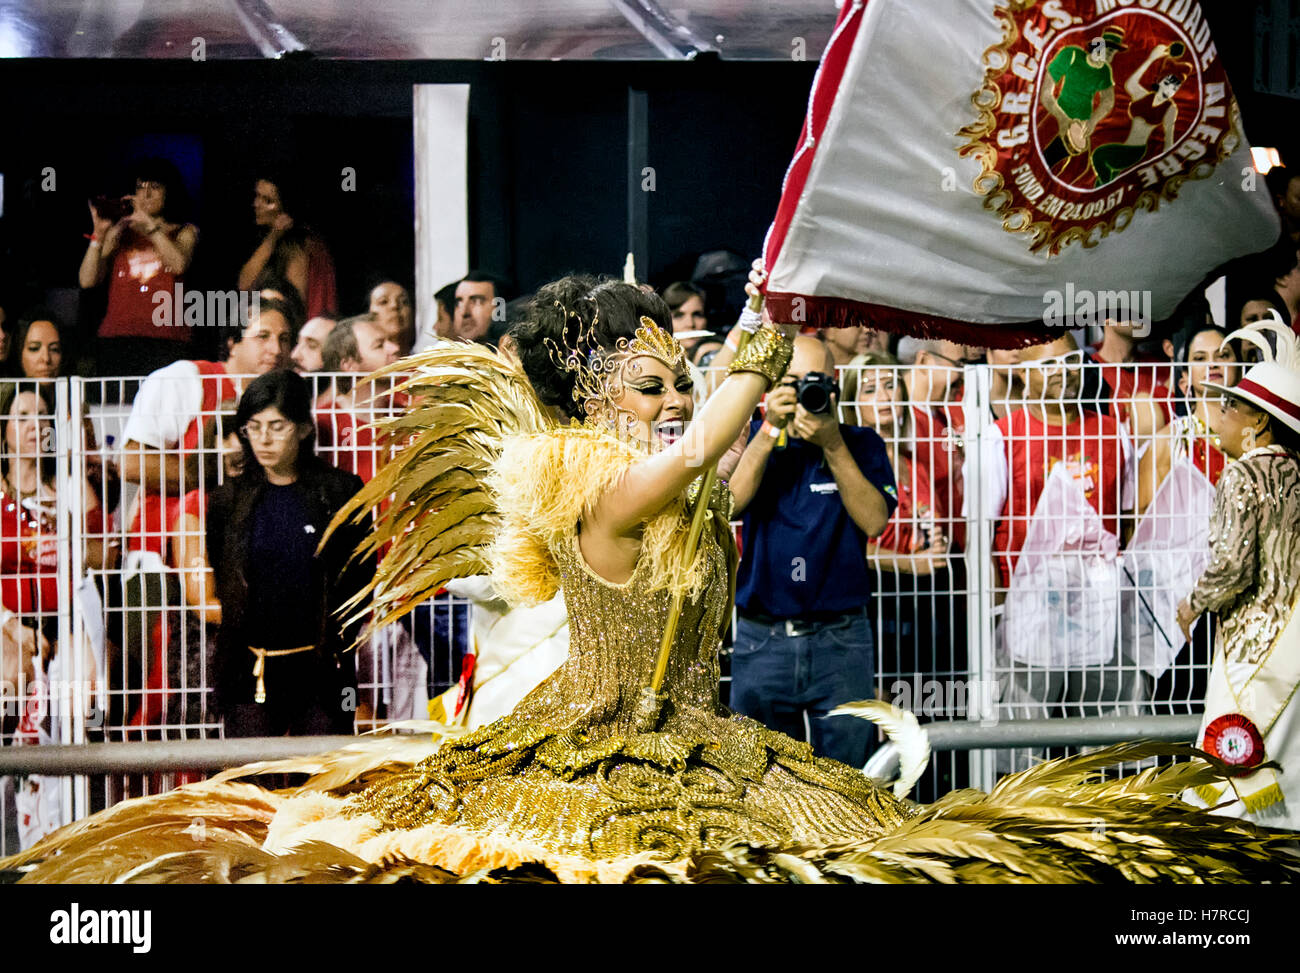 Performers dancing at carnival Brazil. Stock Photo